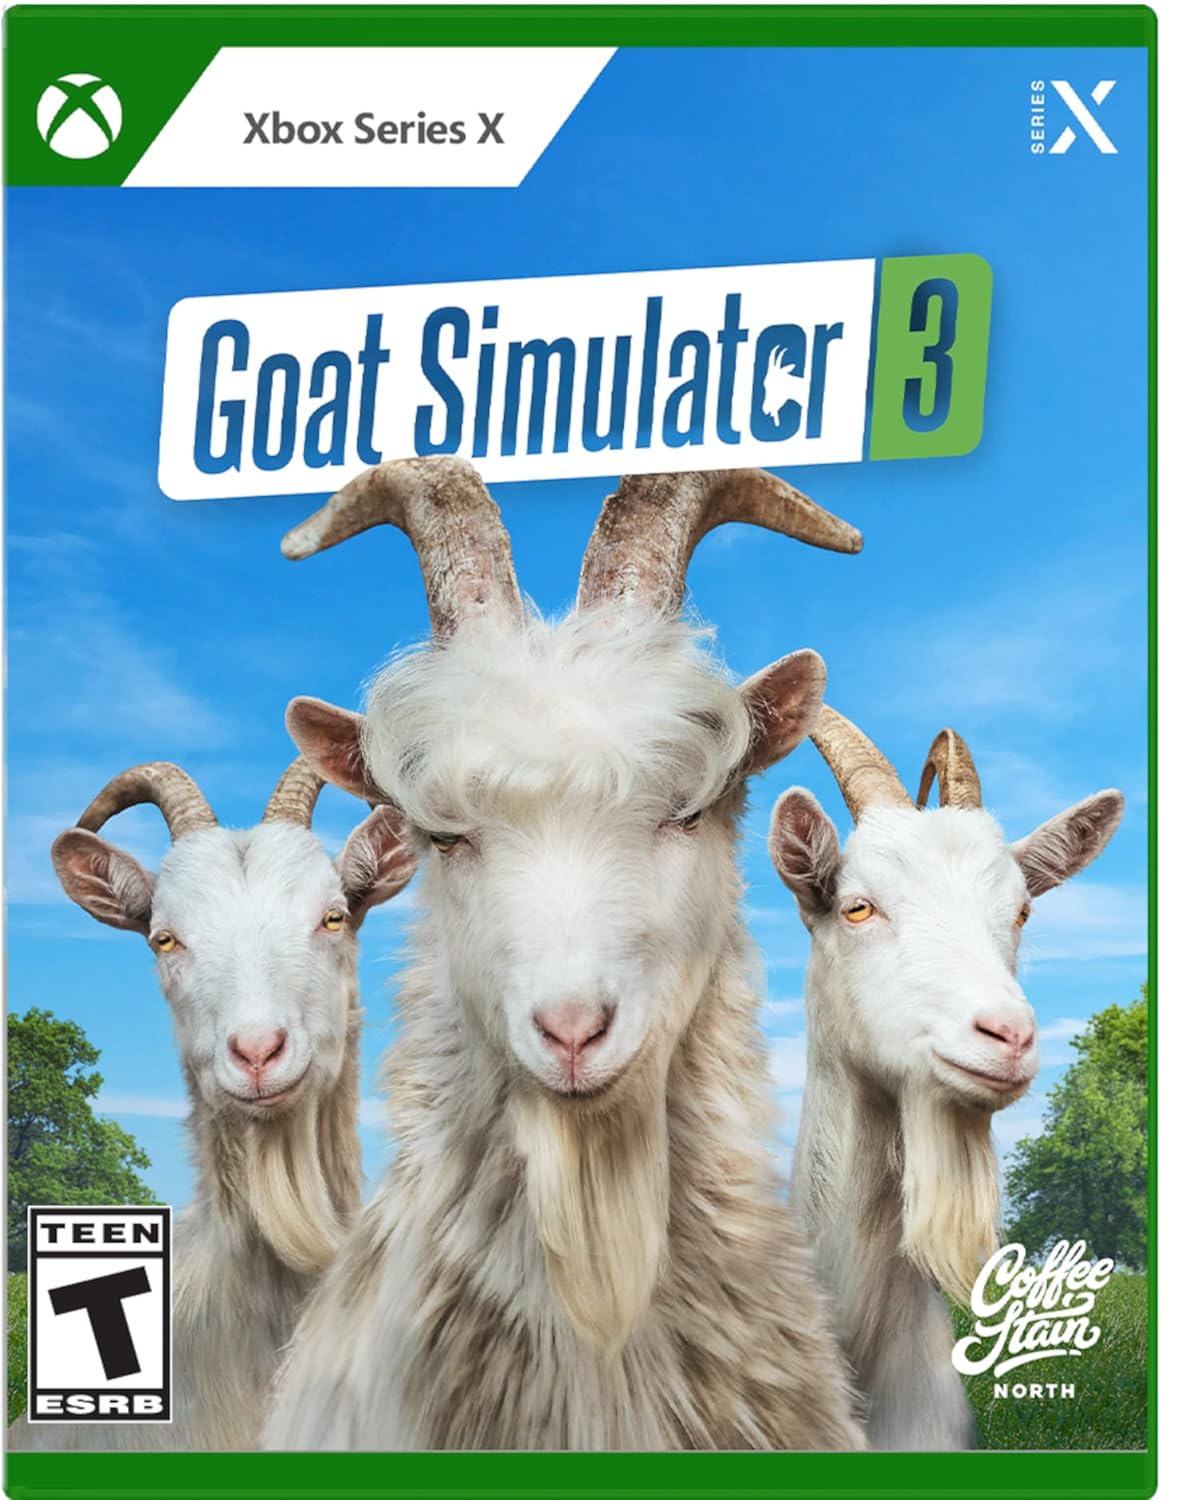 $5: Goat Simulator 3 - Xbox Series X @ Amazon